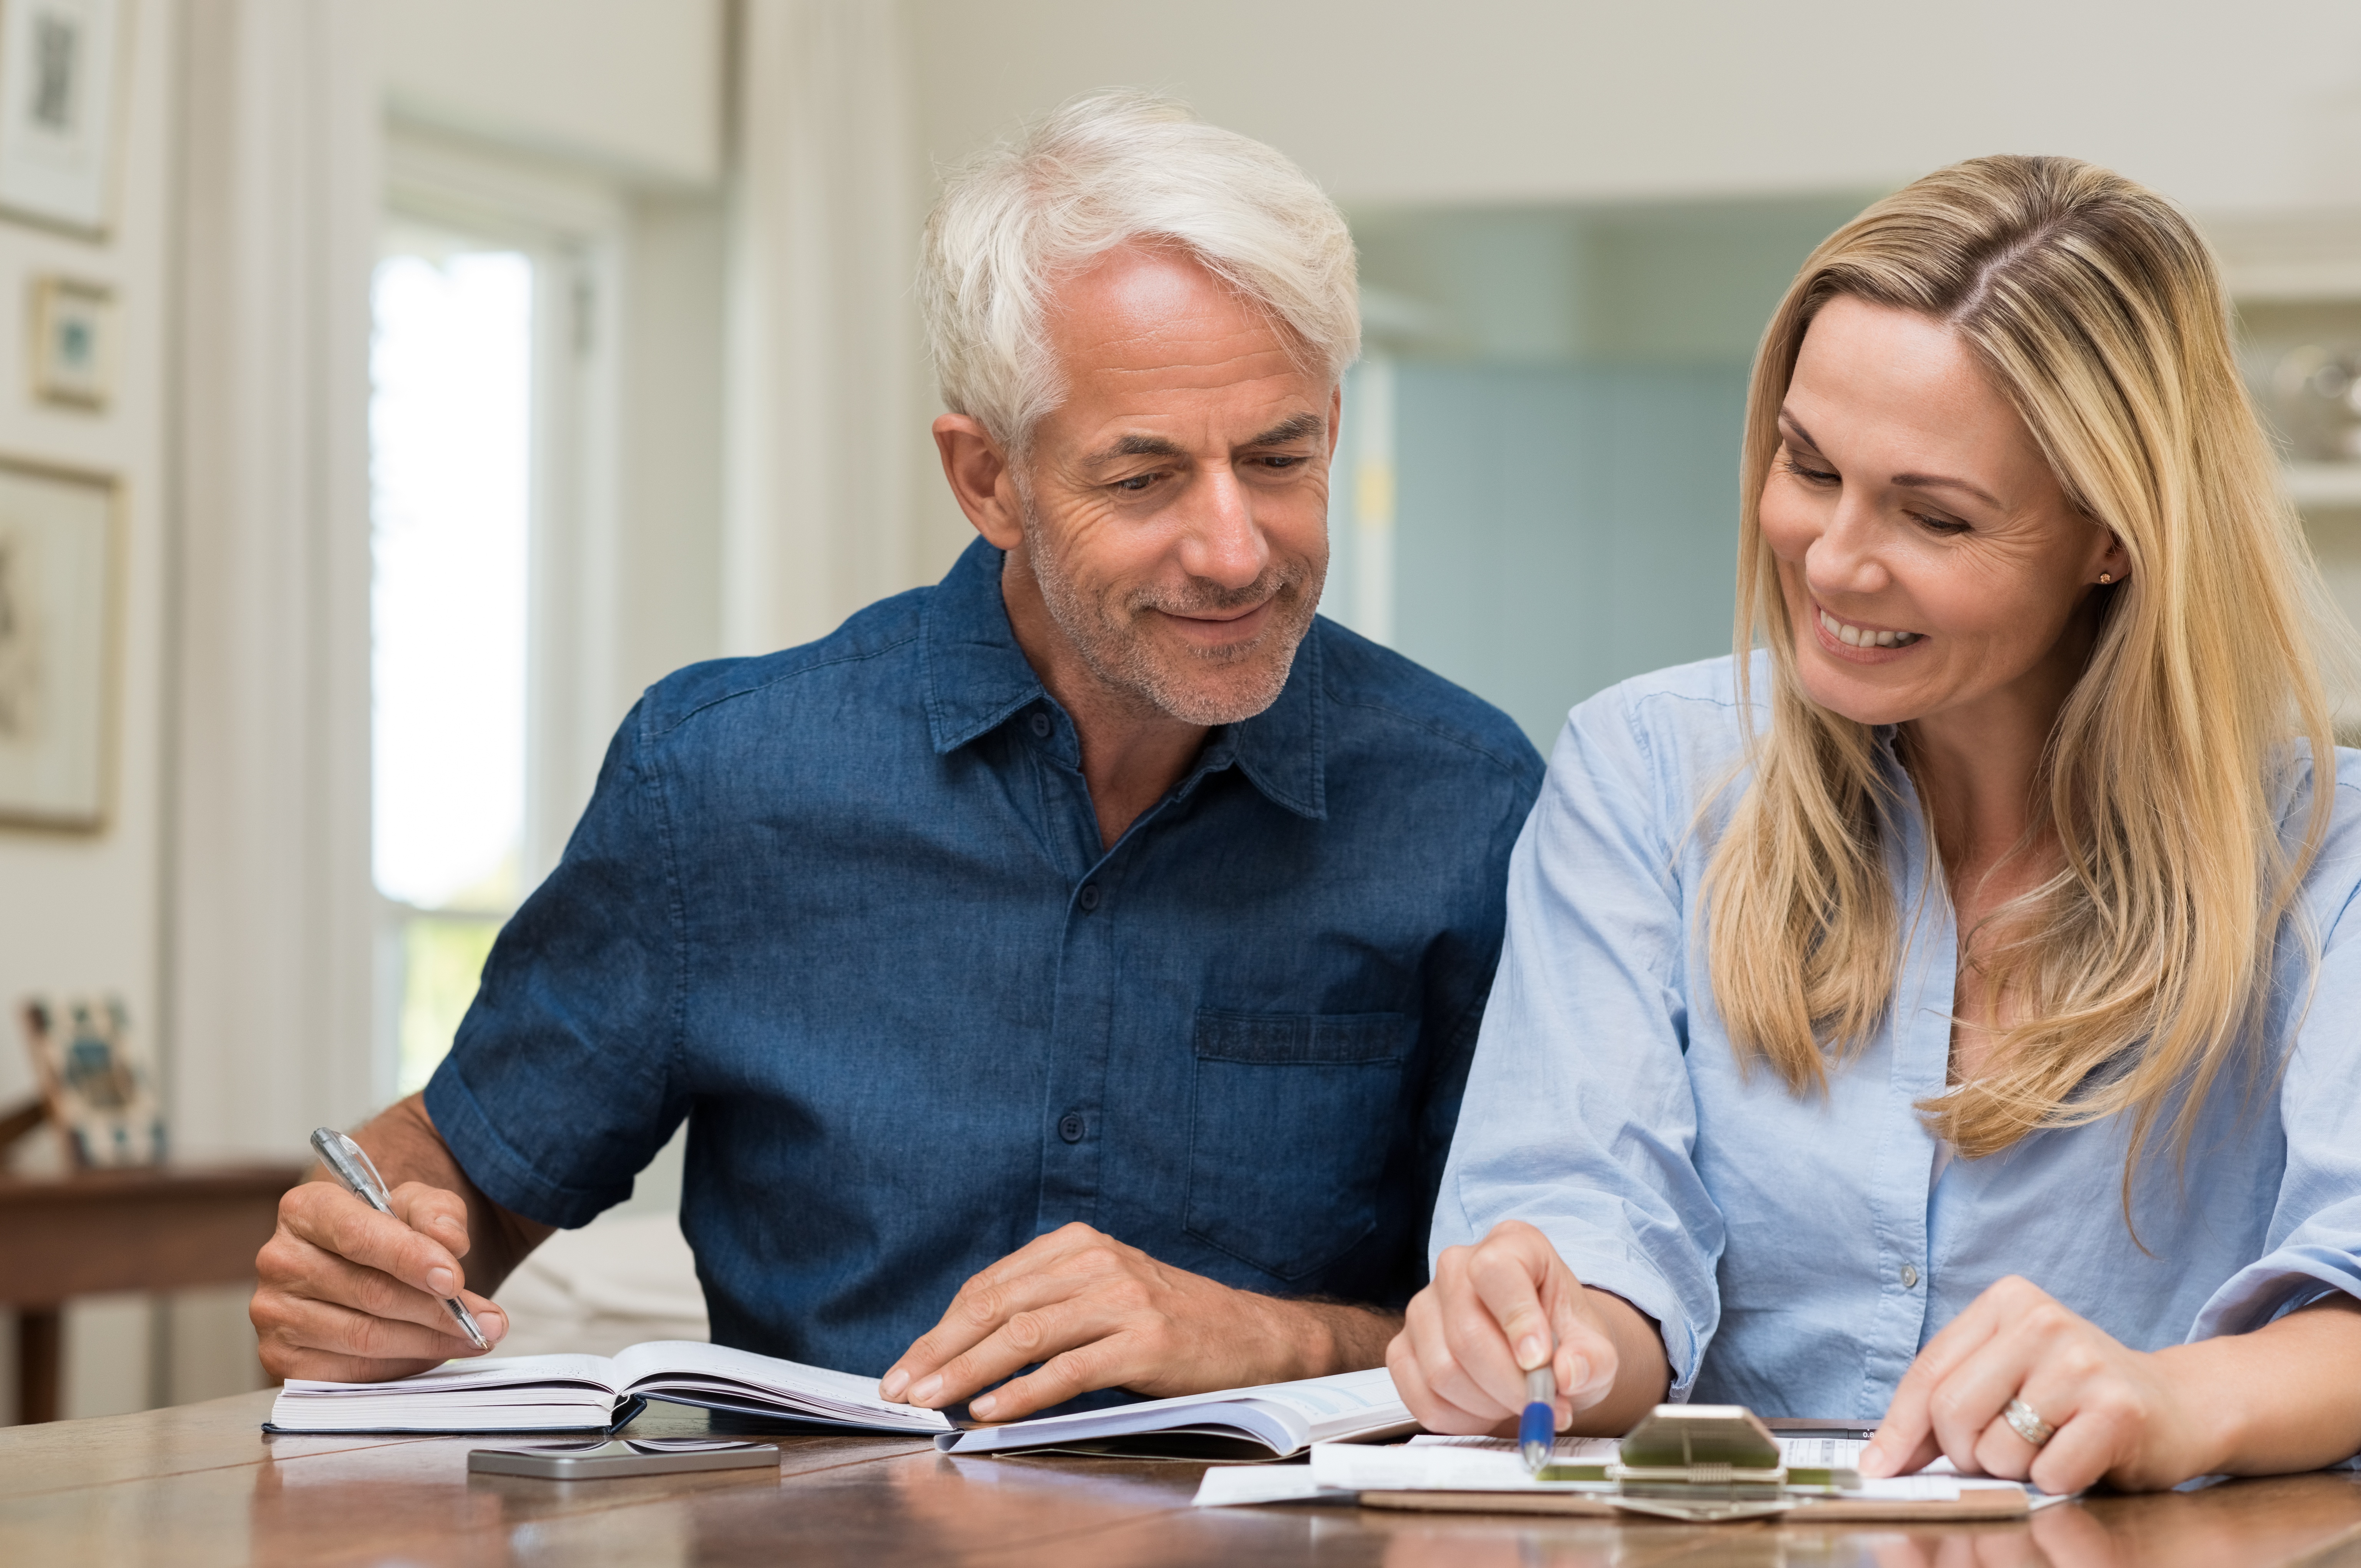 Baton Rouge Financial Planning: How Should I Begin My Retirement Plan?